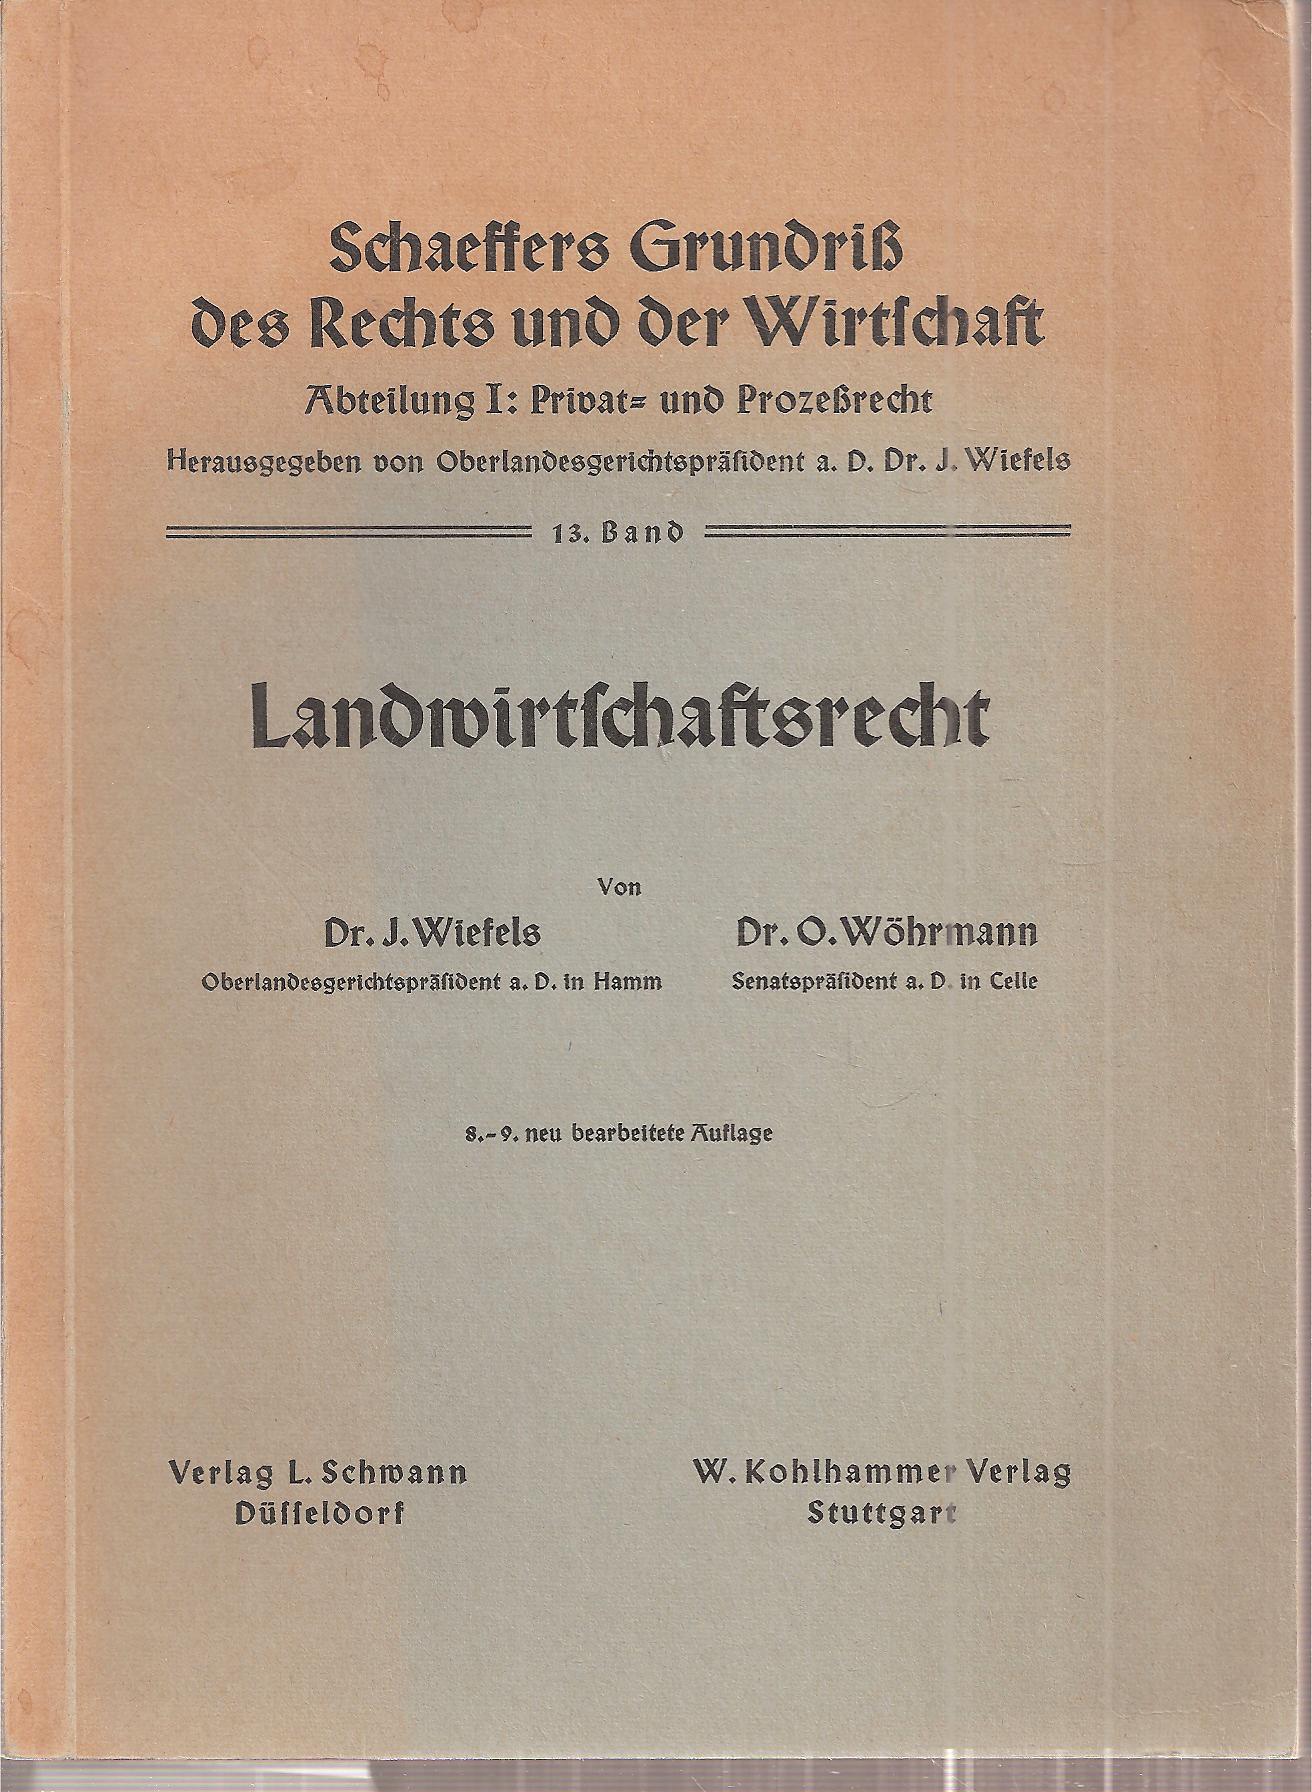 Wiefels,J. und O.Wöhrmann  Landwirtschaftsrecht 